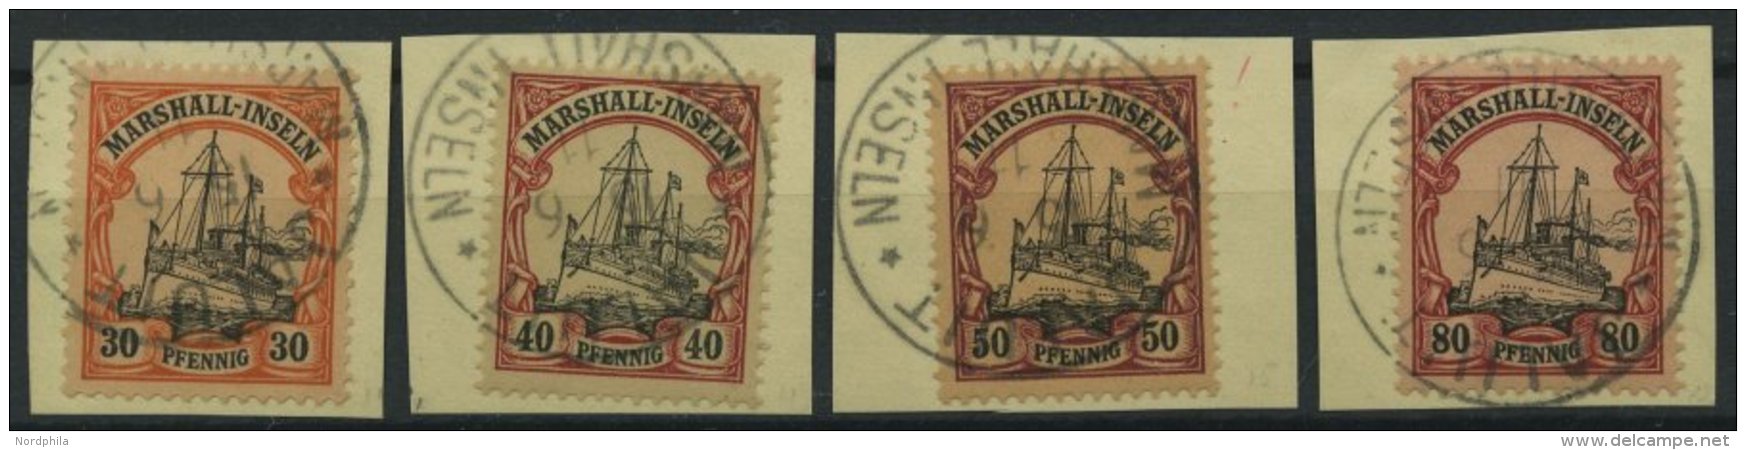 MARSHALL-INSELN 18-21 BrfStk, 1901, 30 - 80 Pf. Kaiseryacht, 4 Prachtbriefstücke, Mi. 108.- - Marshall Islands